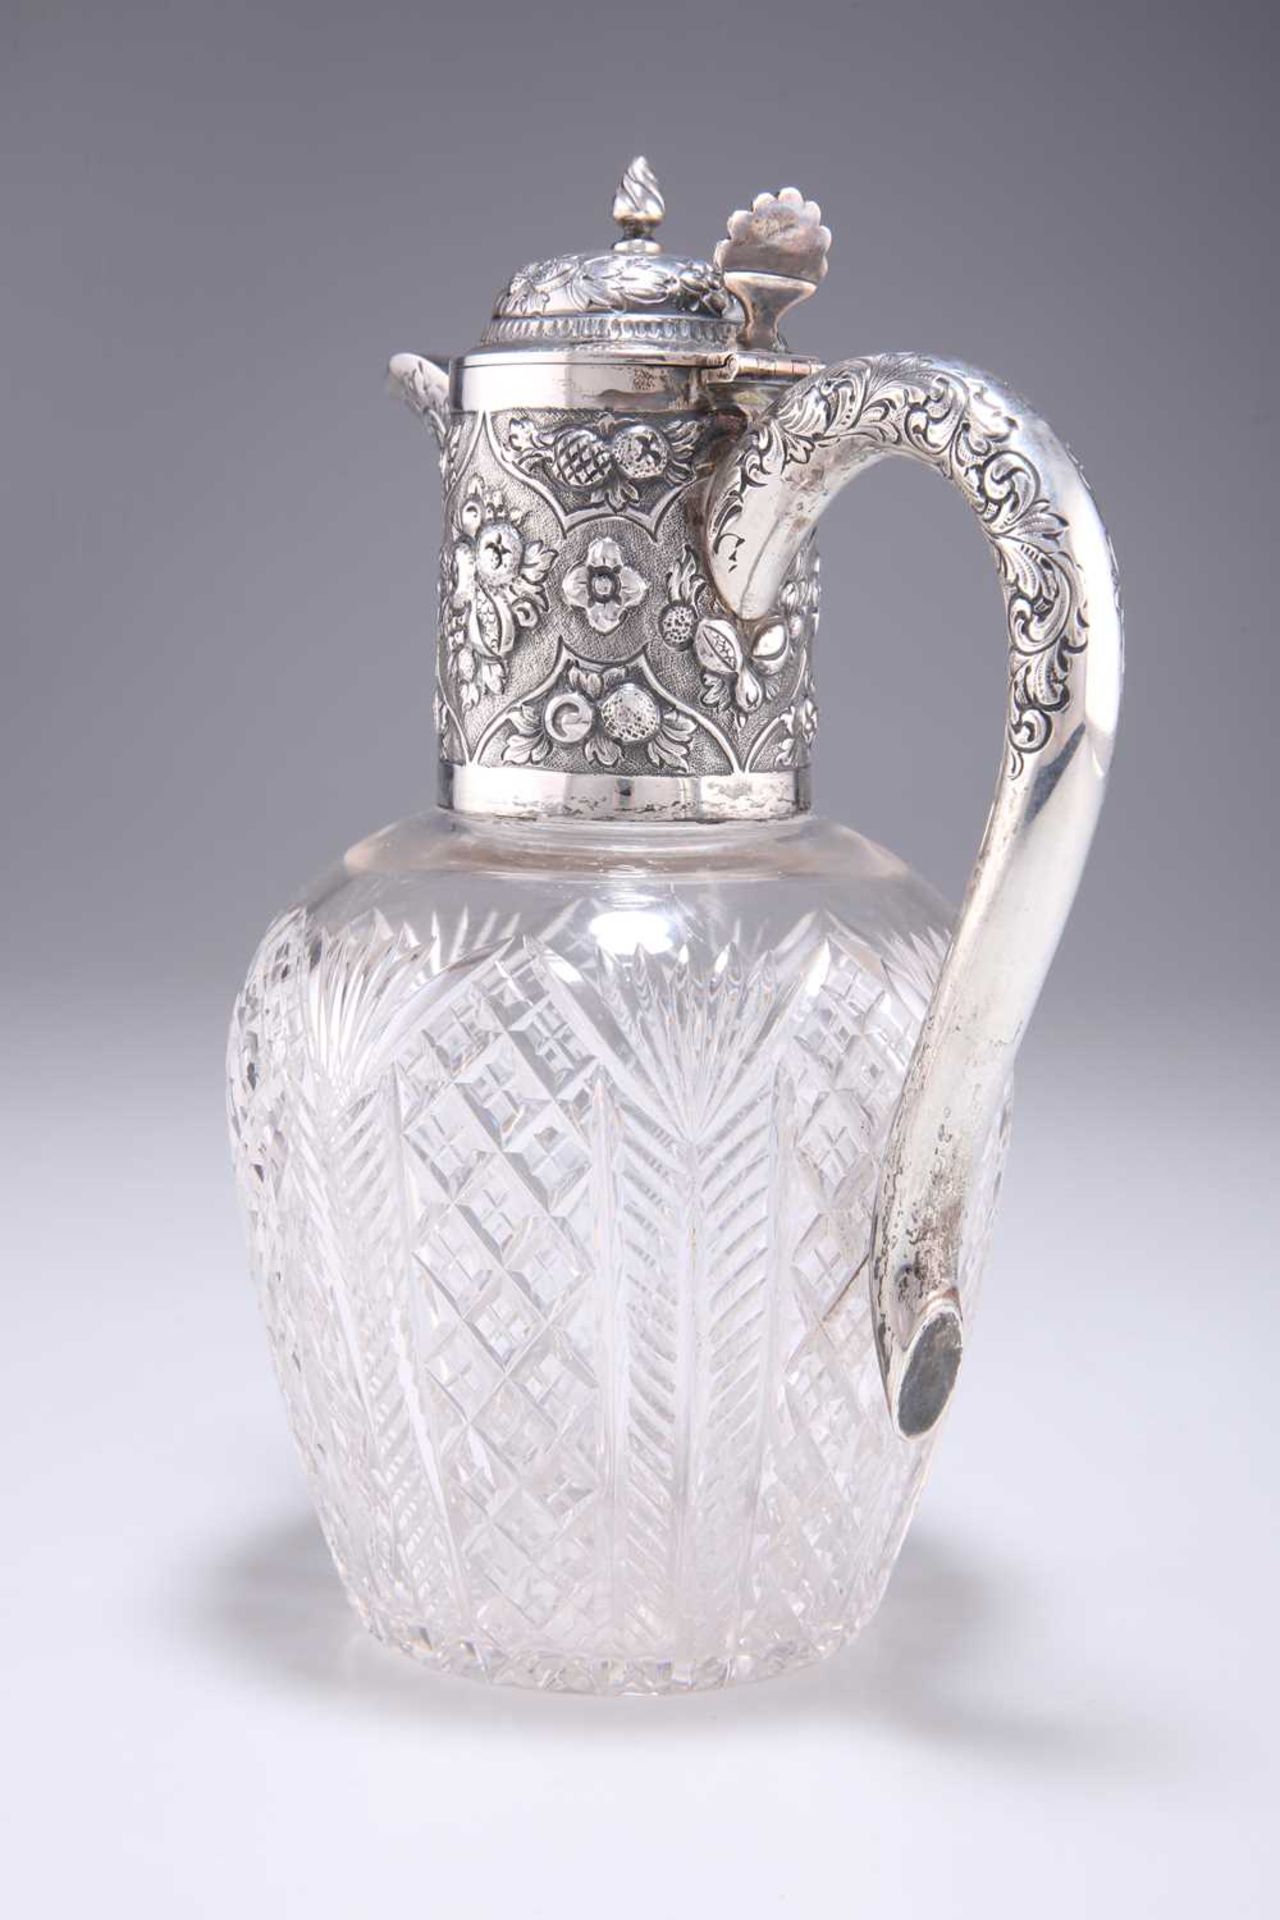 AN EDWARDIAN SILVER-MOUNTED CUT-GLASS CLARET JUG - Image 3 of 4